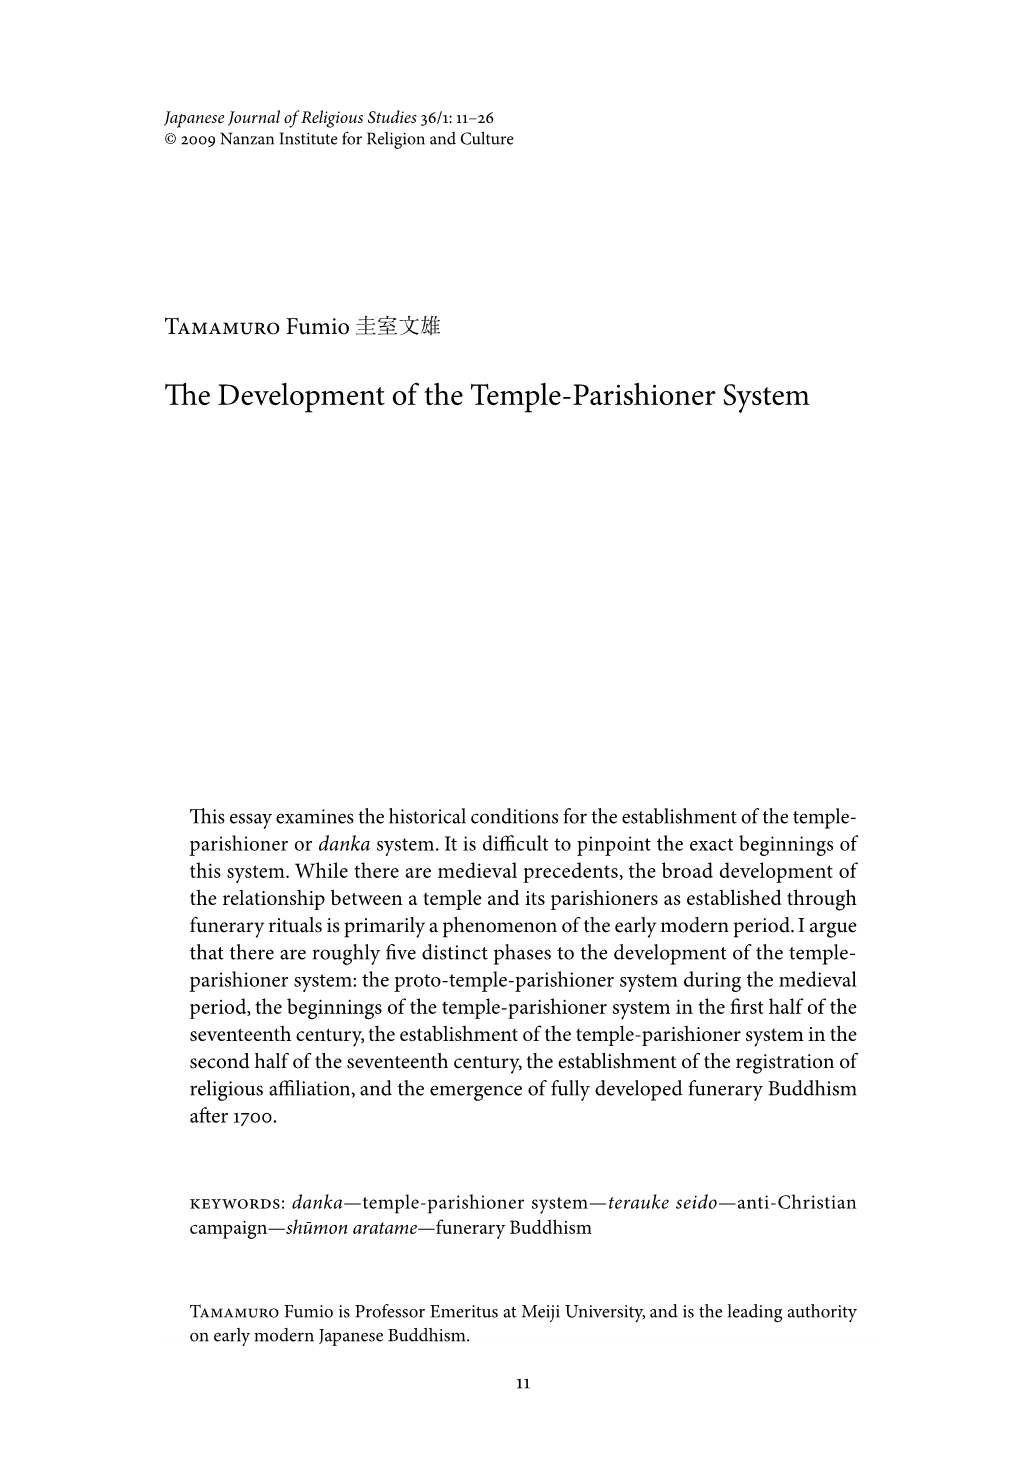 The Development of the Temple-Parishioner System